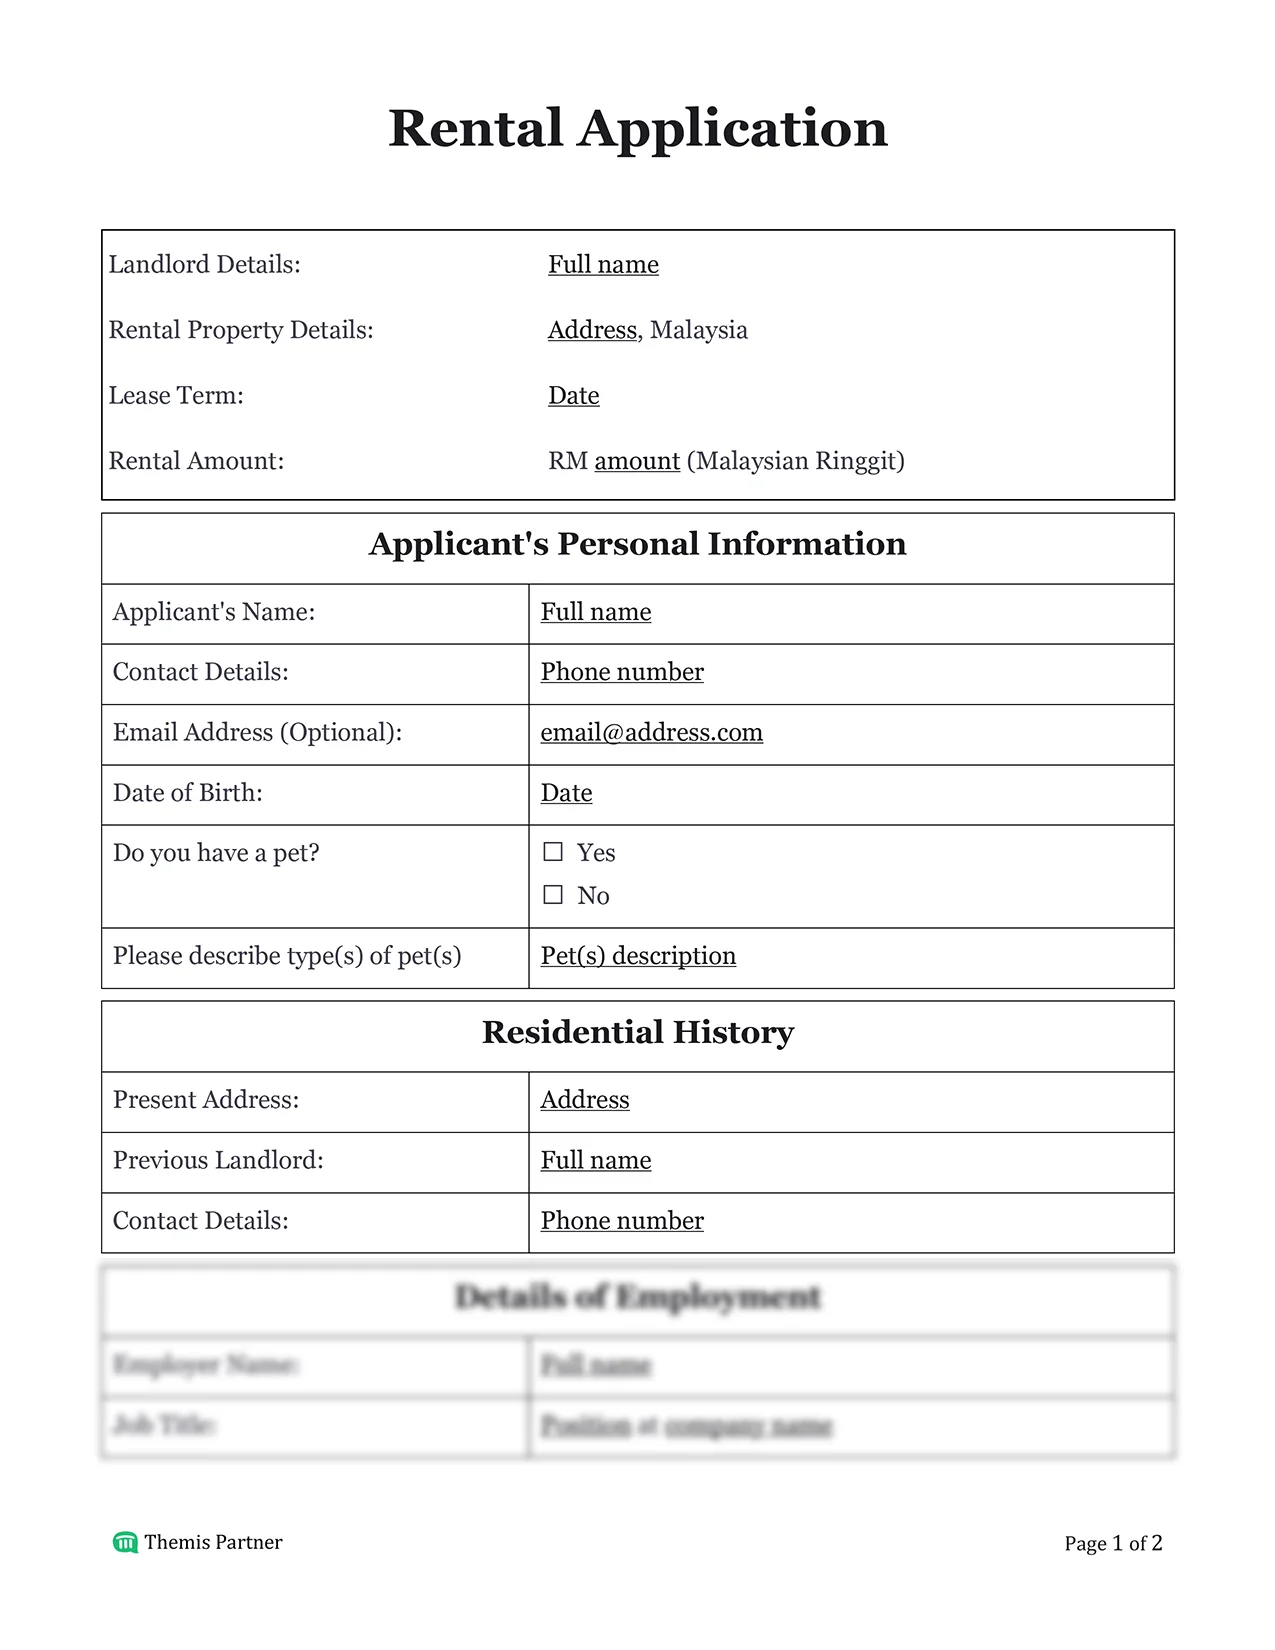 Rental application Malaysia 1